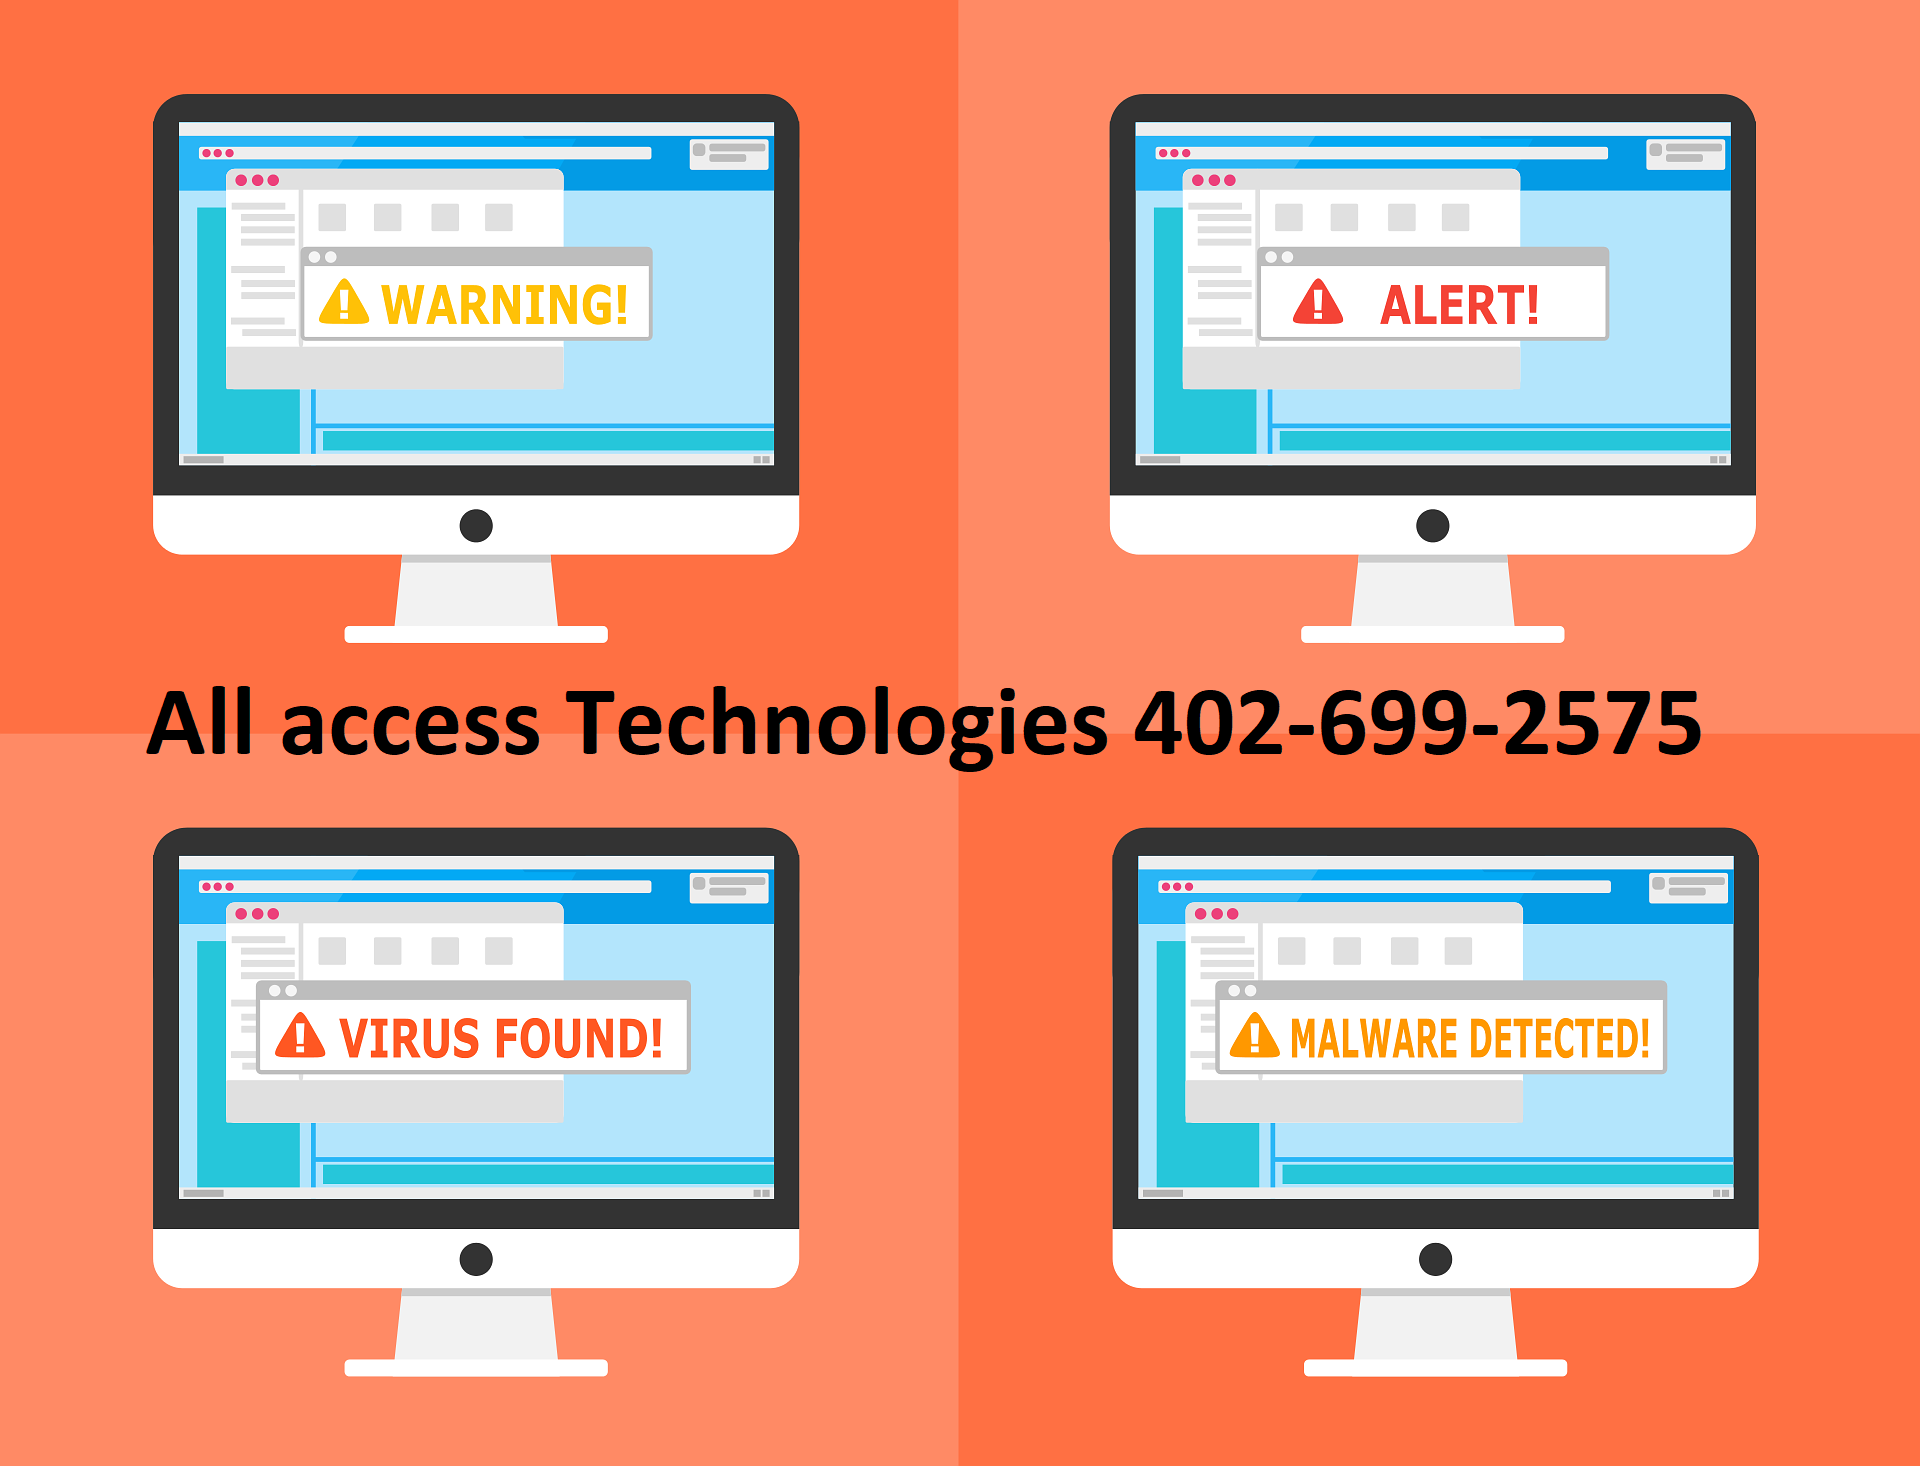 All access Technologies 402-699-2575